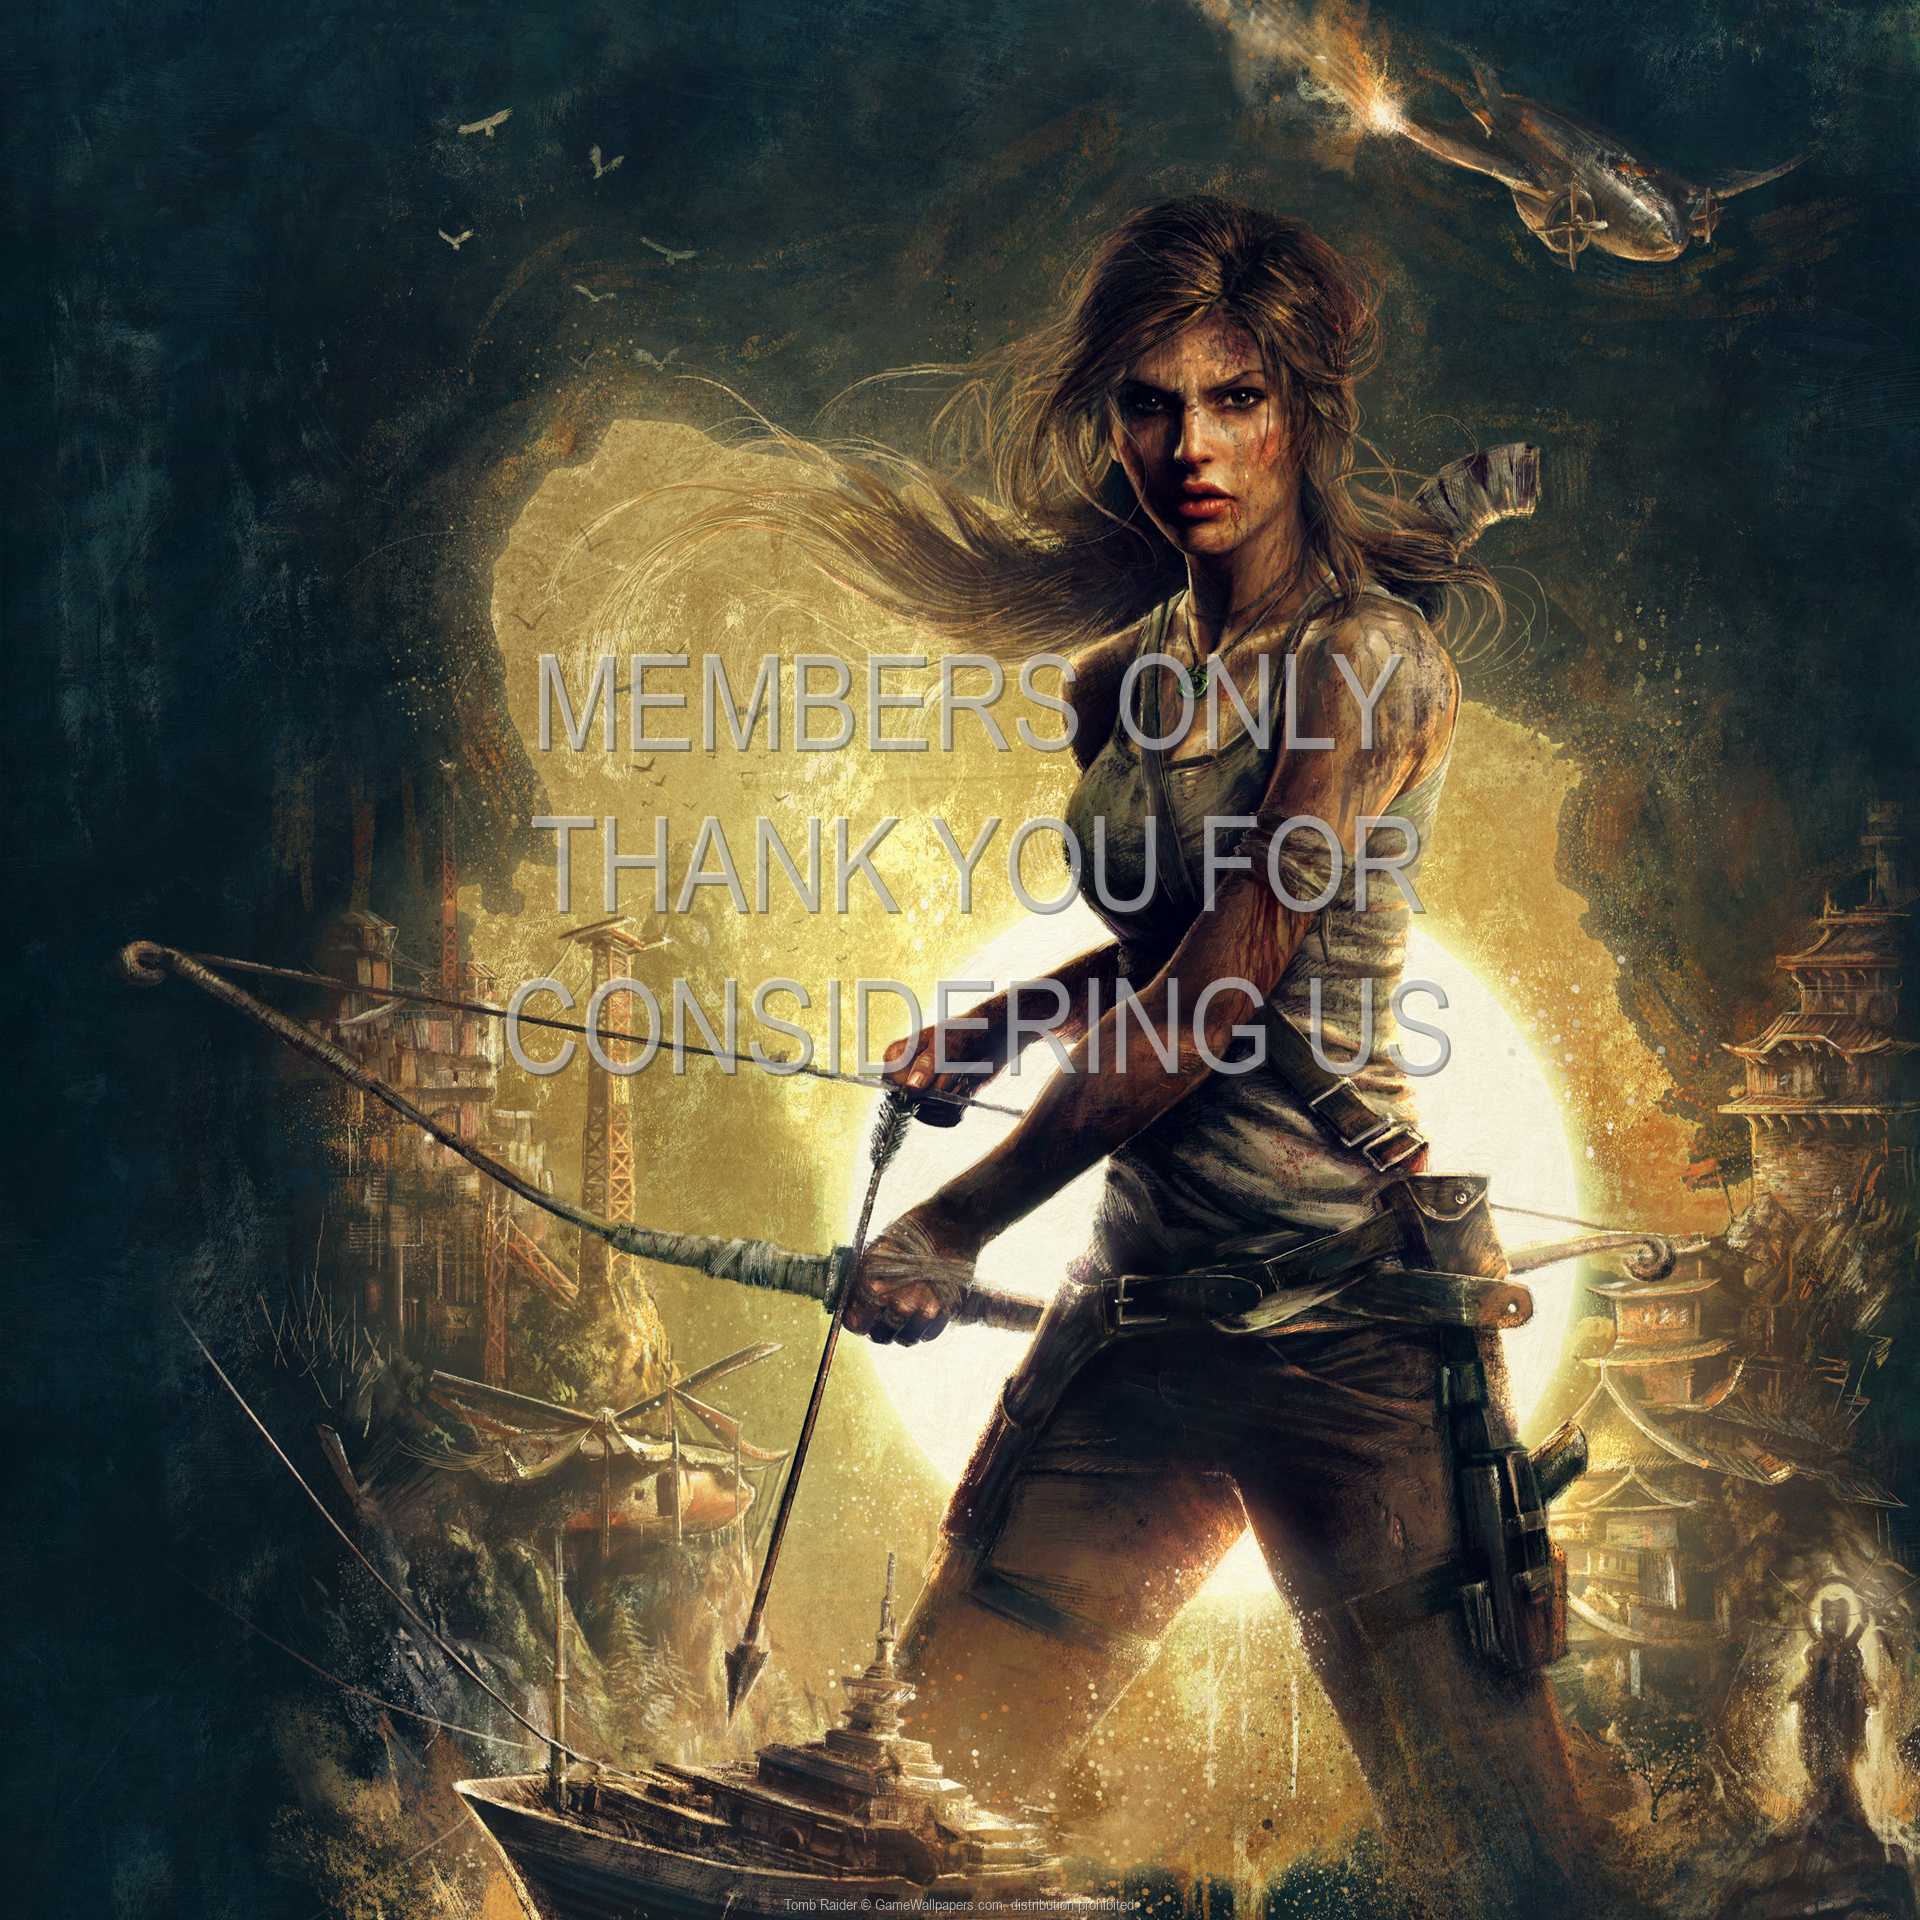 Tomb Raider 1080p Horizontal Mobile wallpaper or background 13